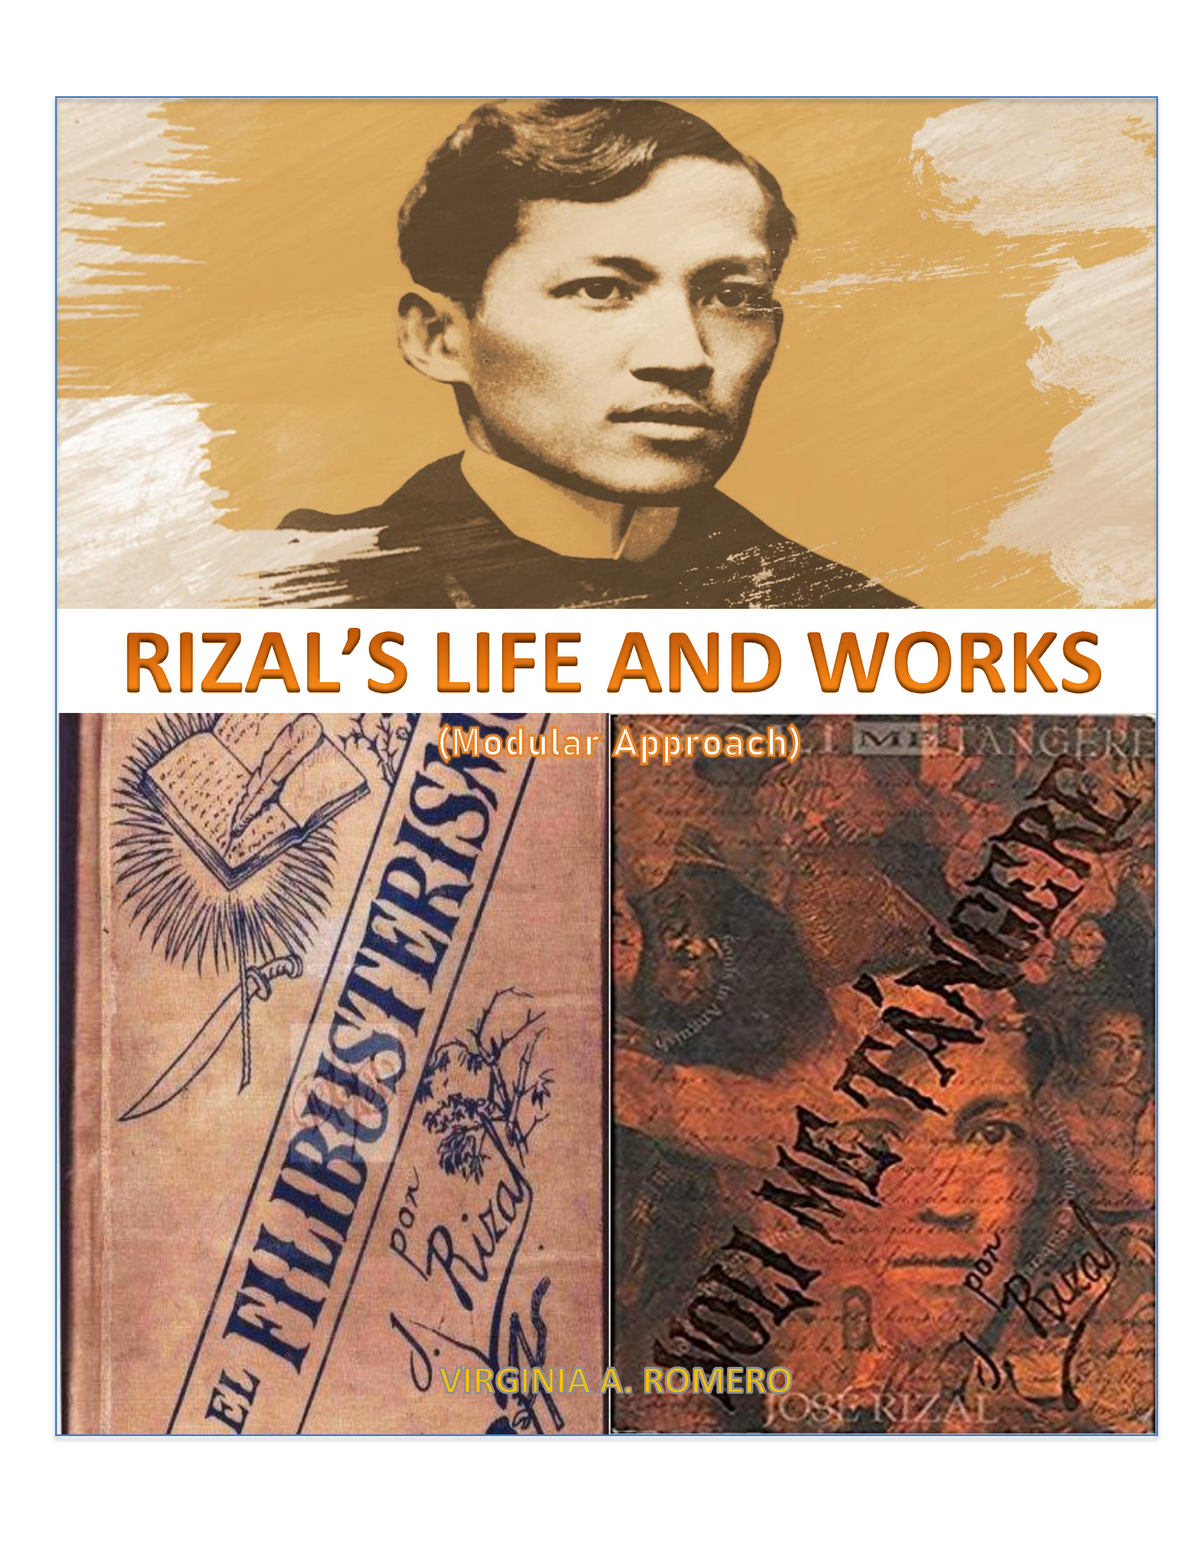 studymode rizal life works and writings chapter 12 summary